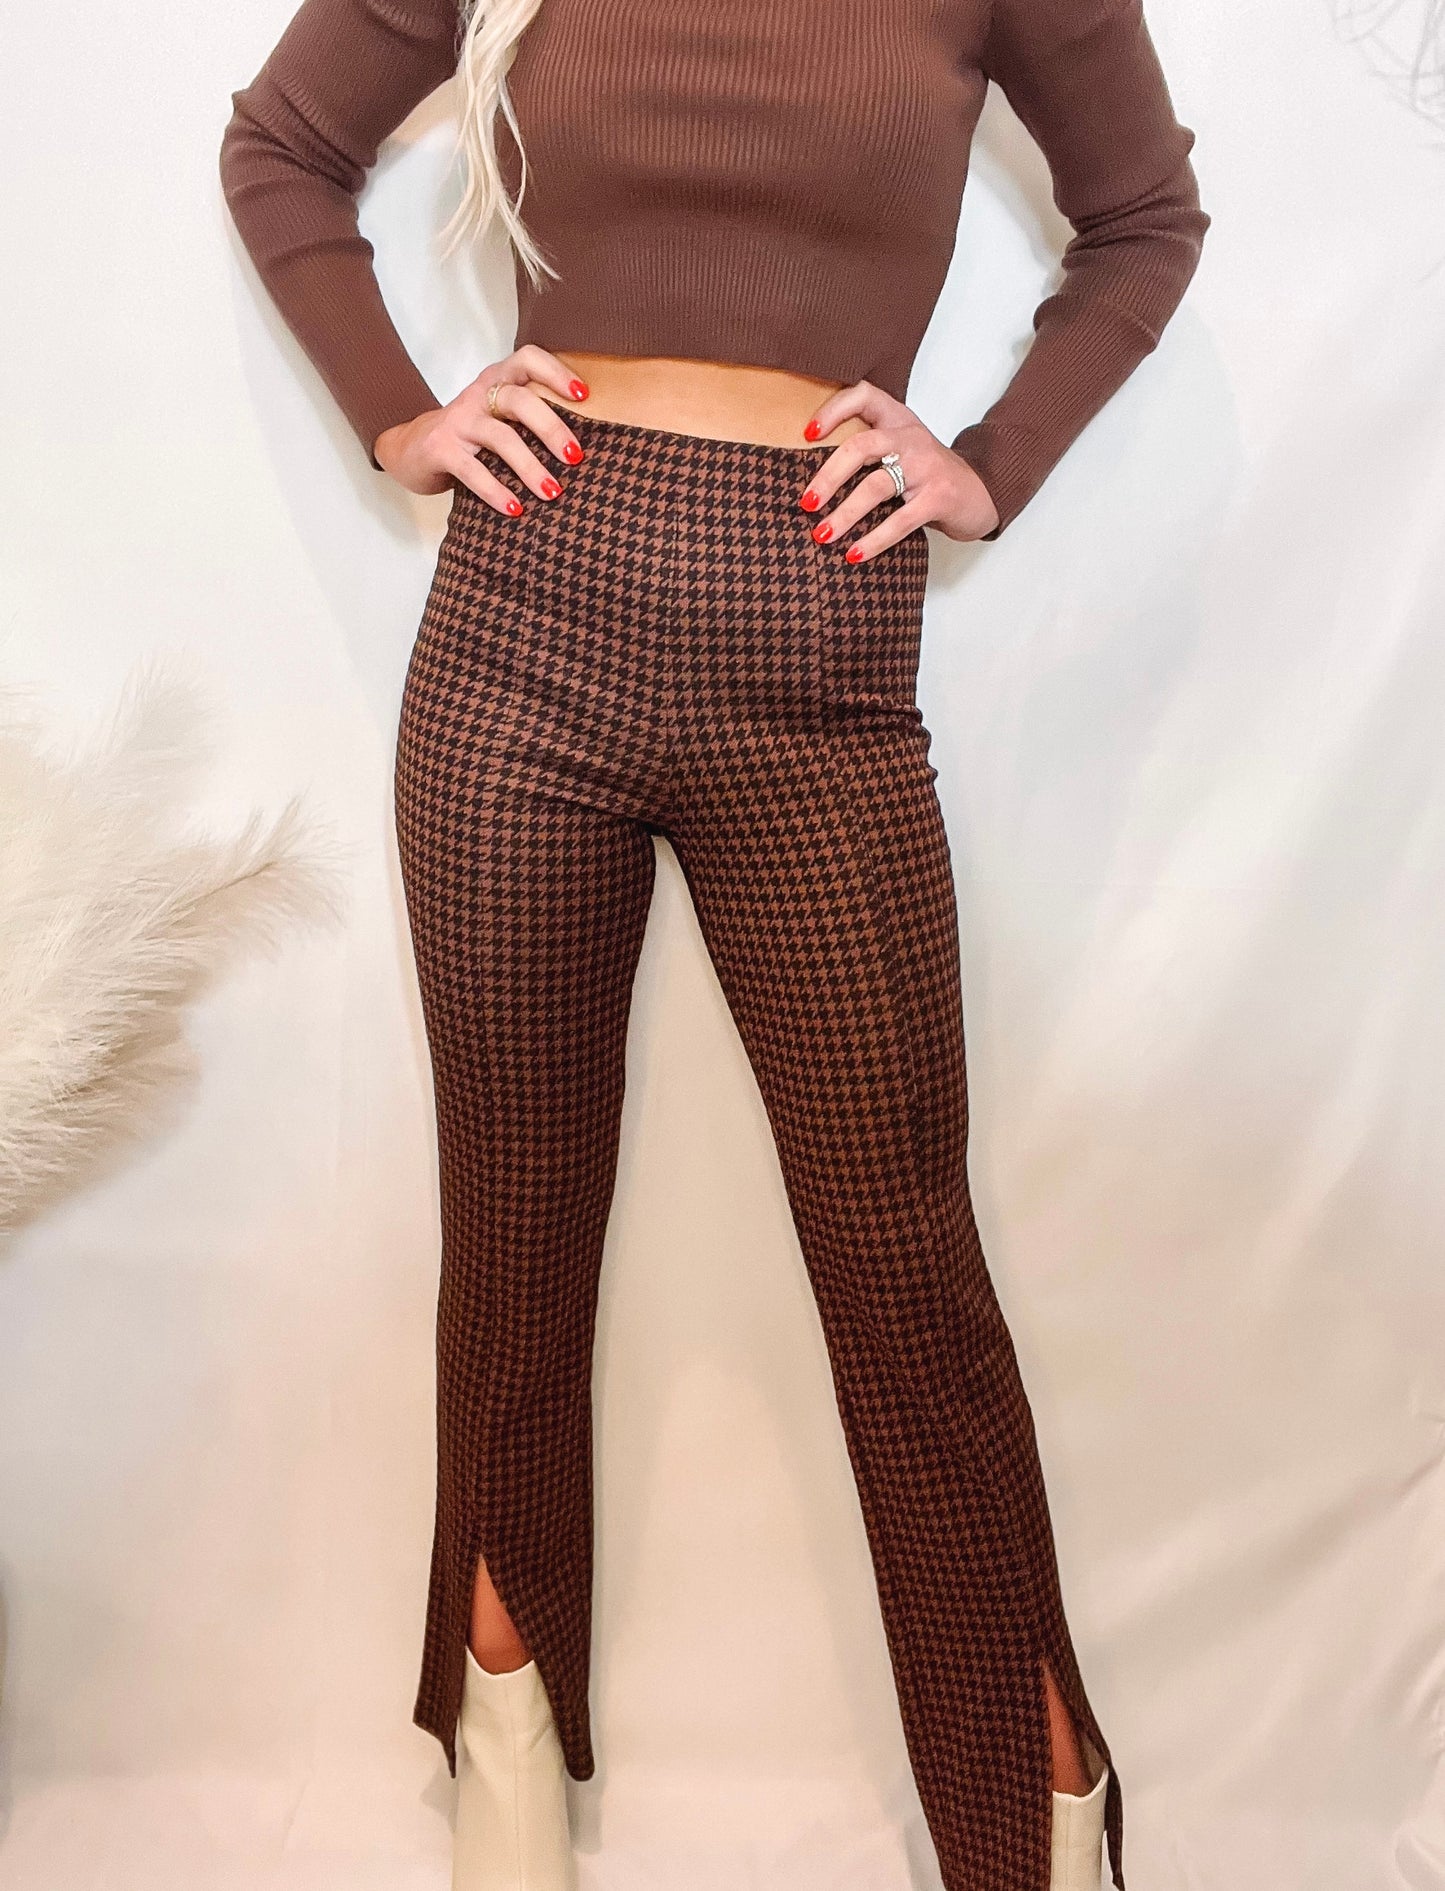 Brown/Black Checkered Pants